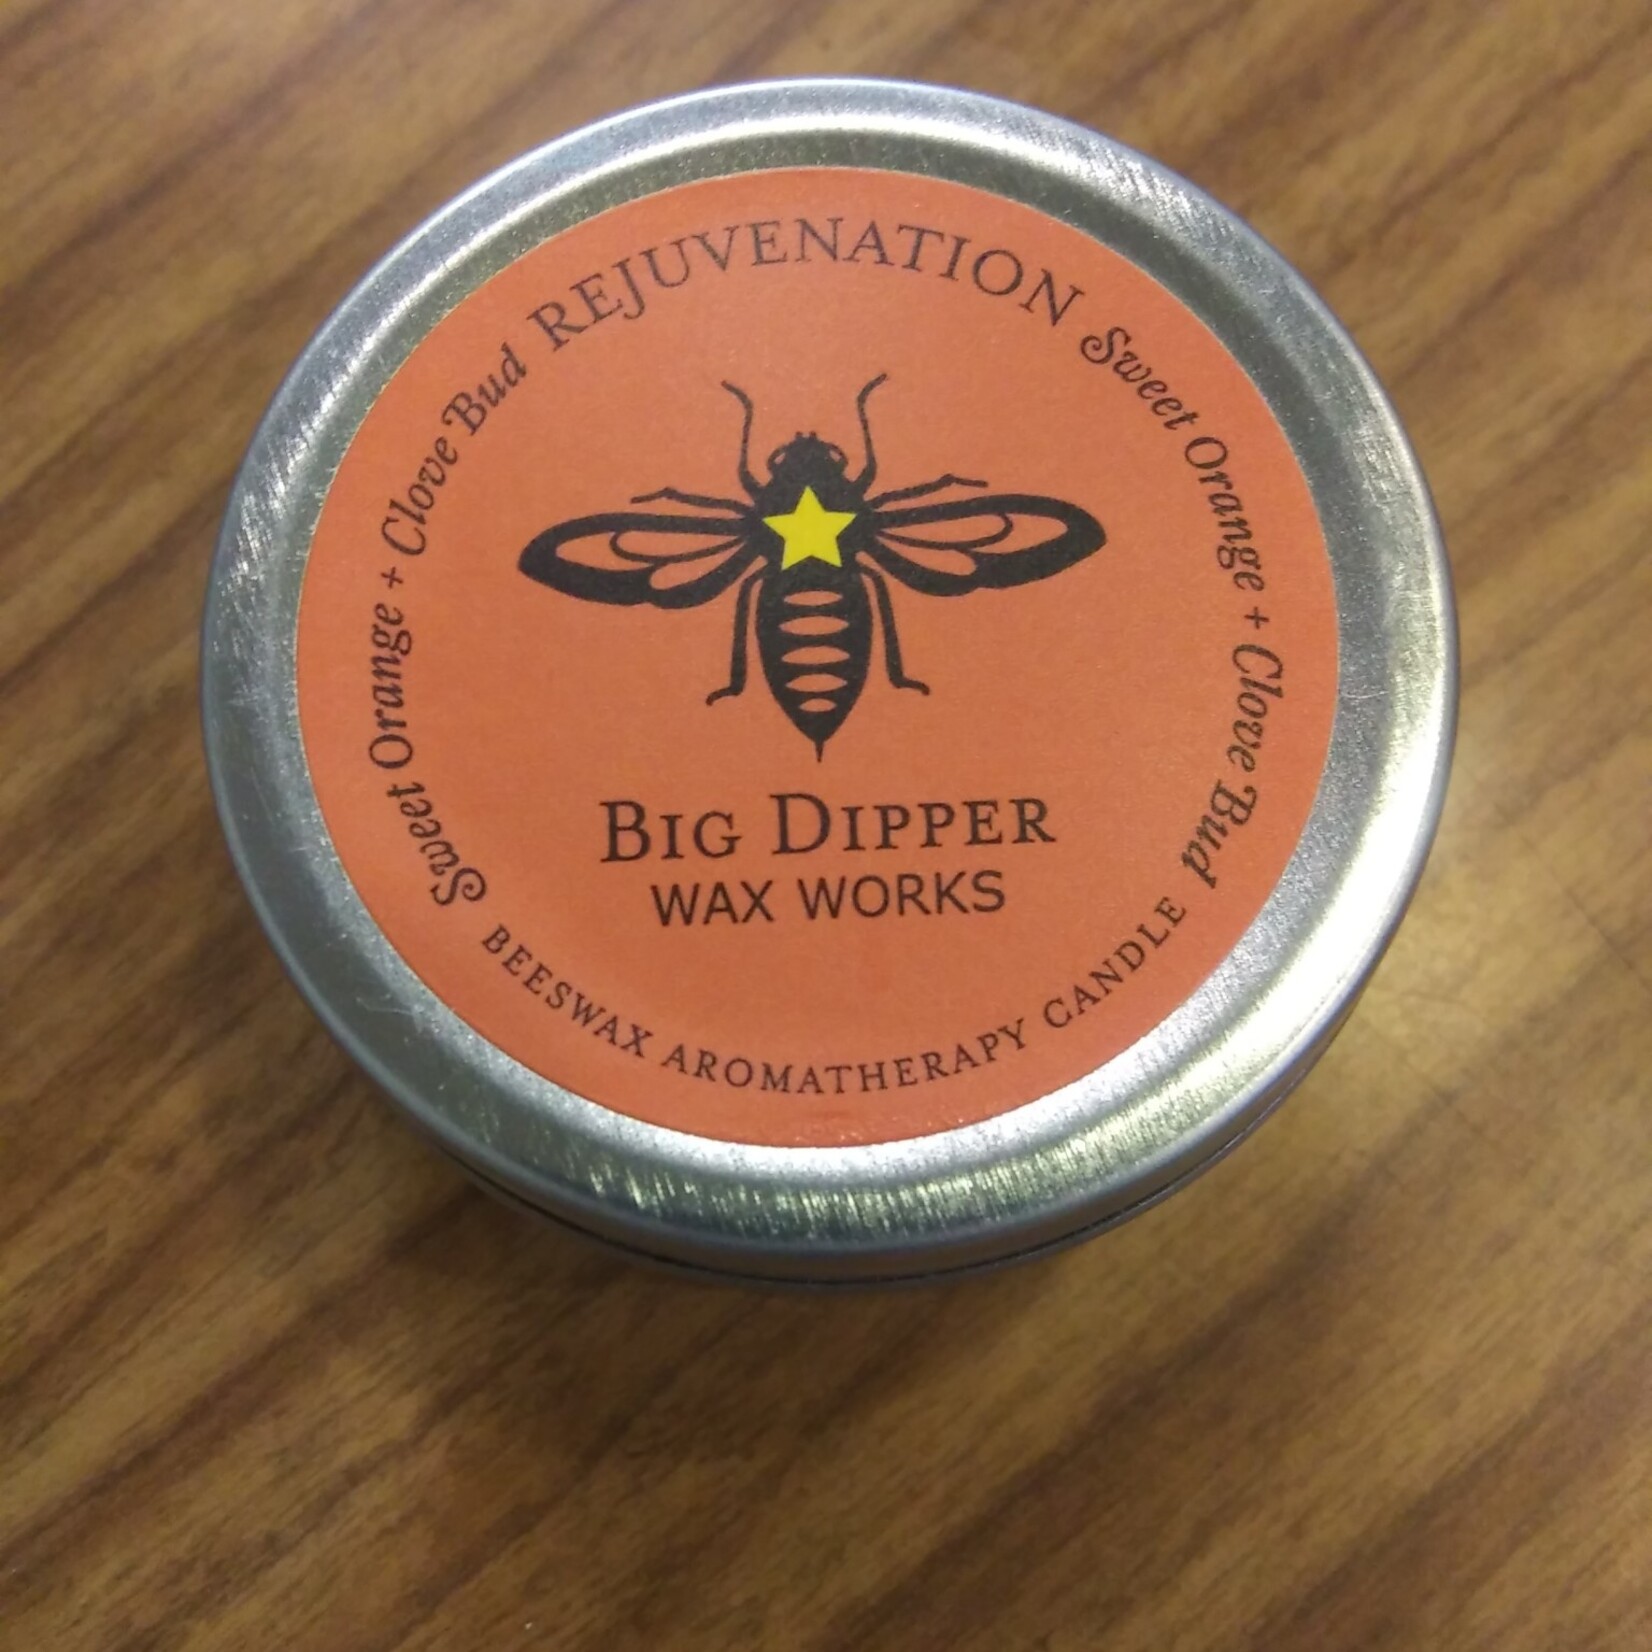 Big Dipper "Rejuvenation" Aromatherapy Candle: